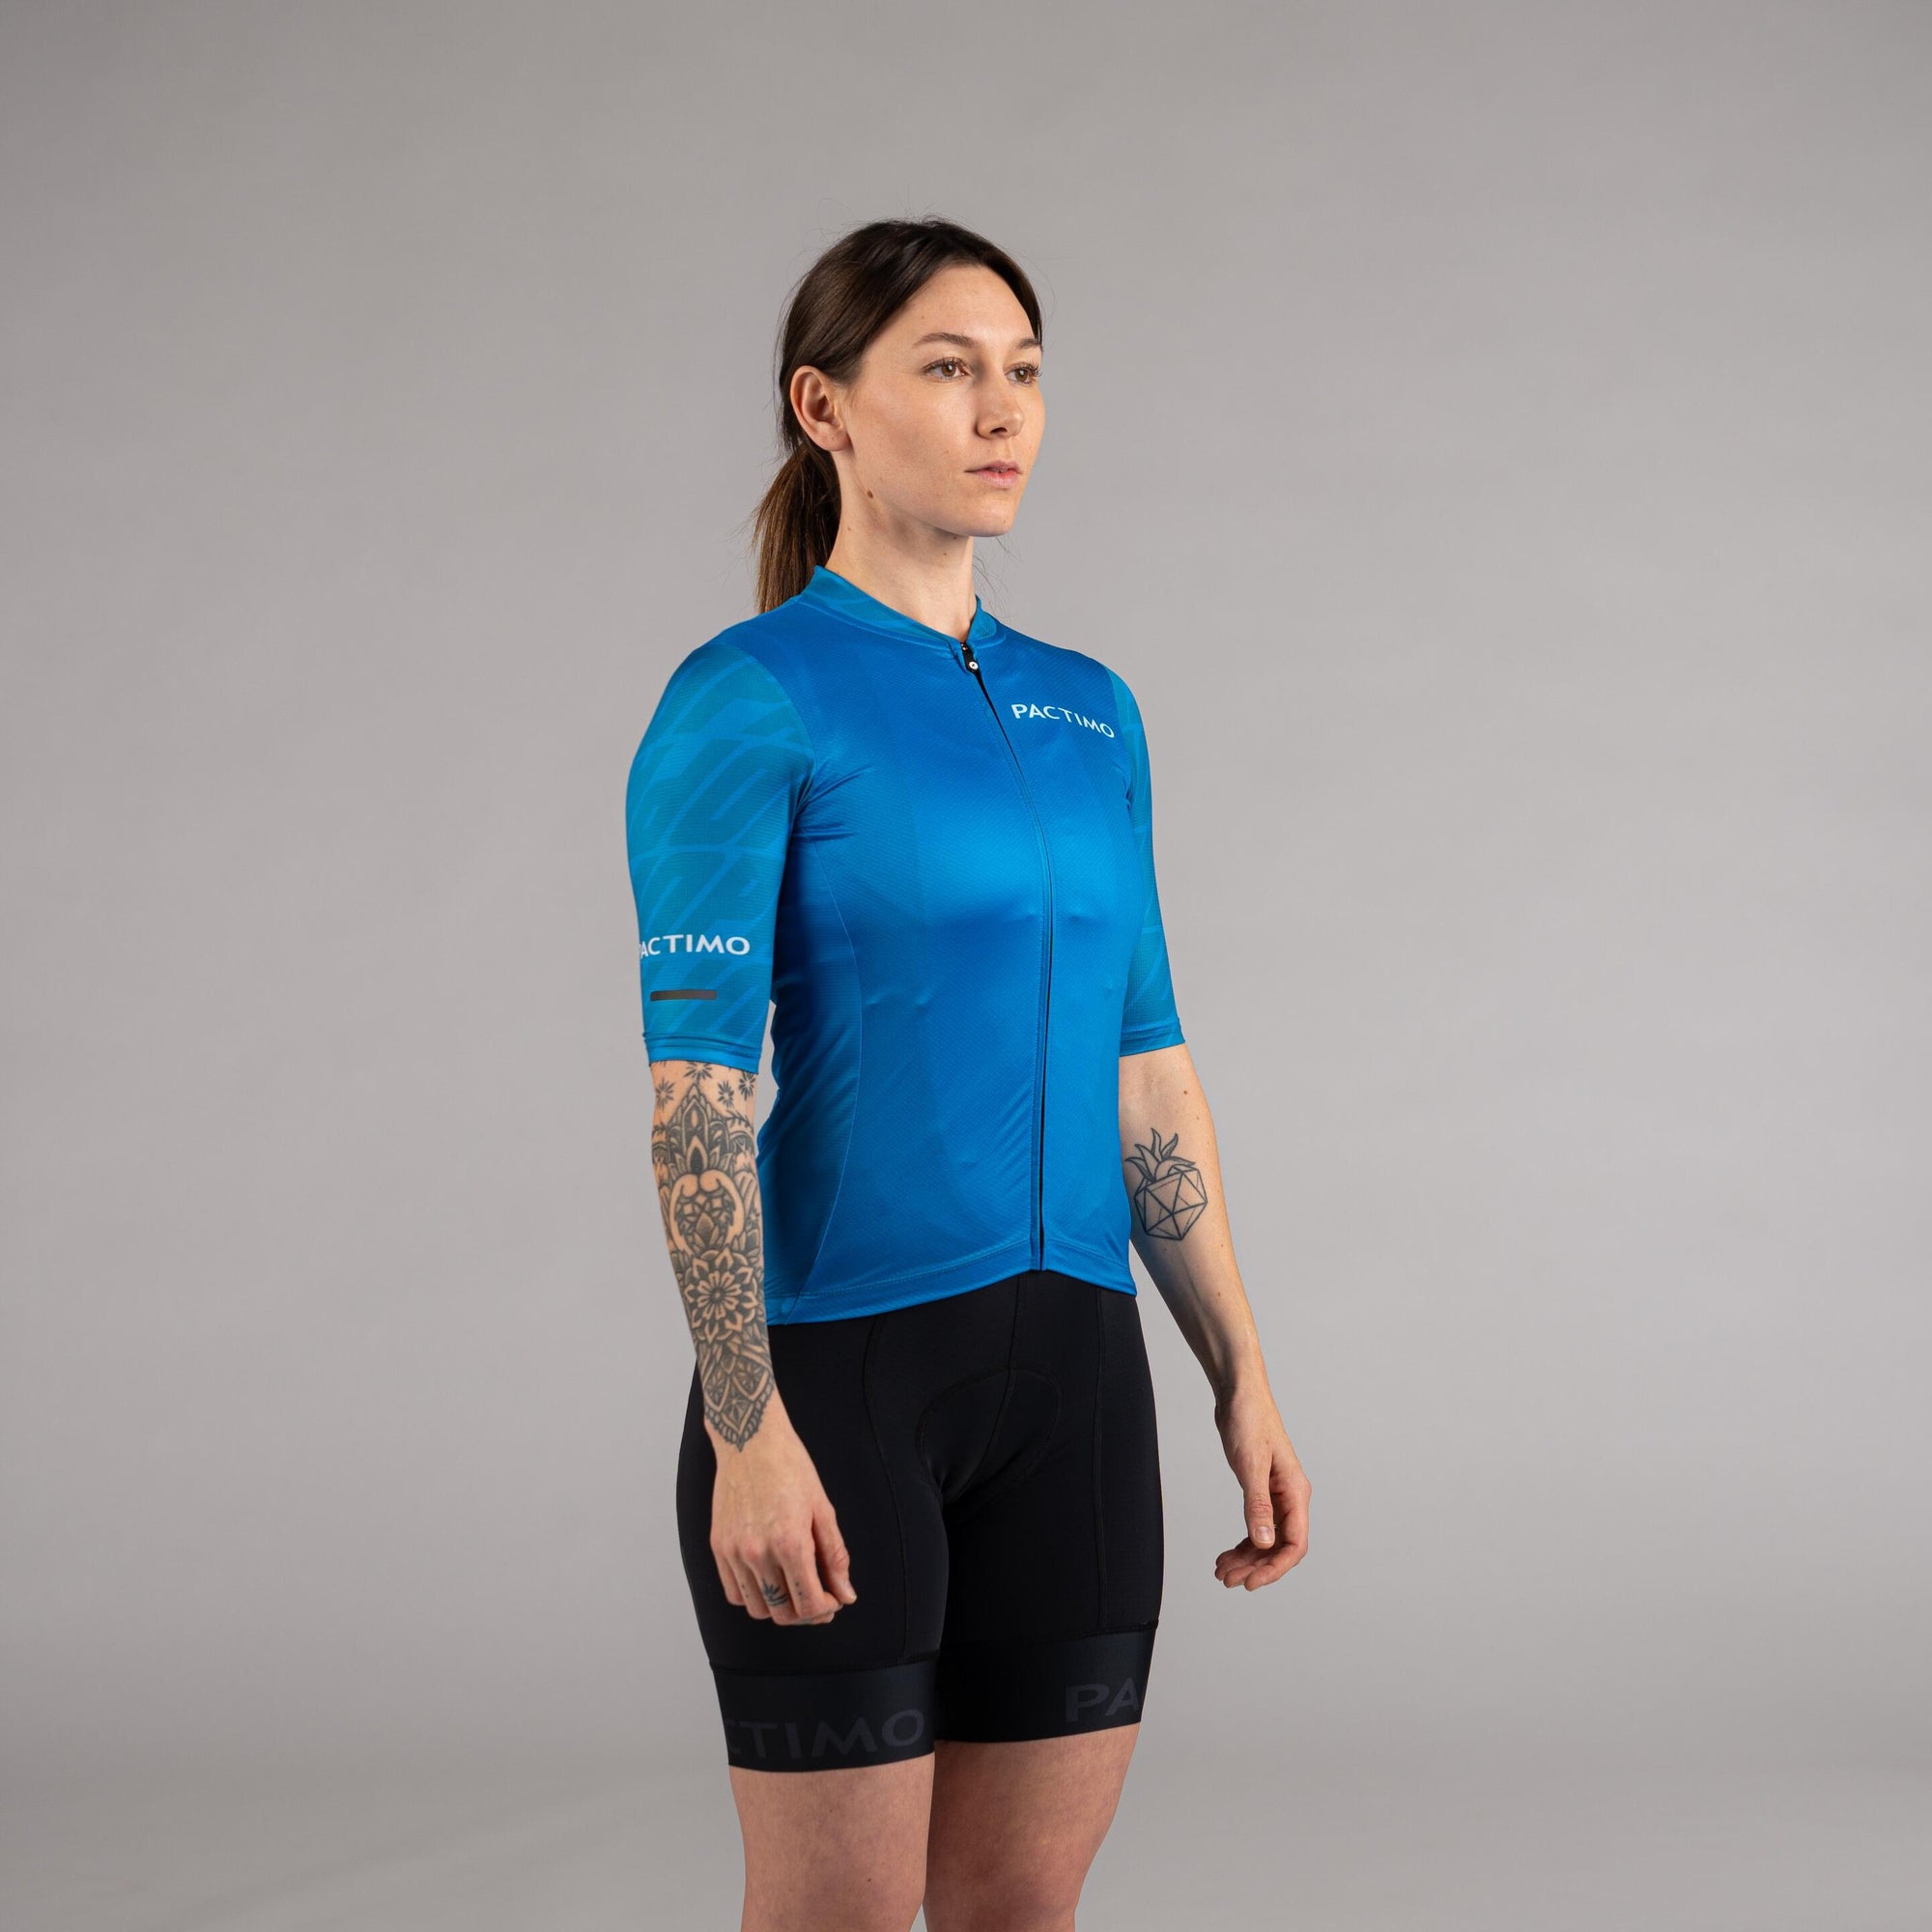 Women's Ascent Aero Cycling Jersey - Fit Comparison